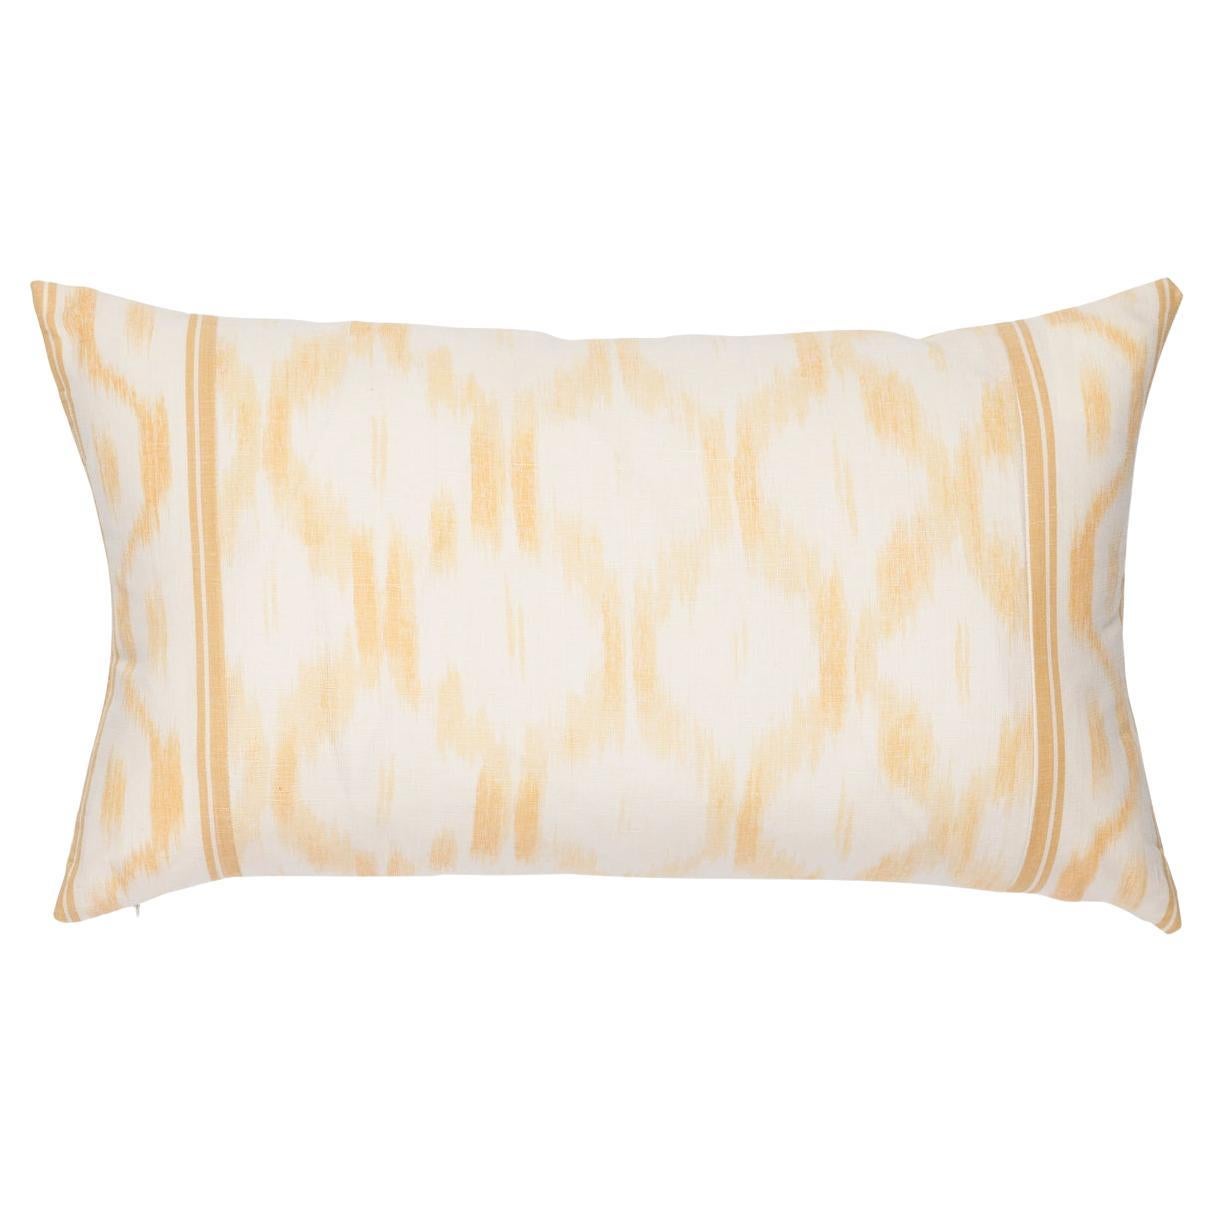 Schumacher Santa Monica Ikat 26x15" Pillow in Yellow For Sale